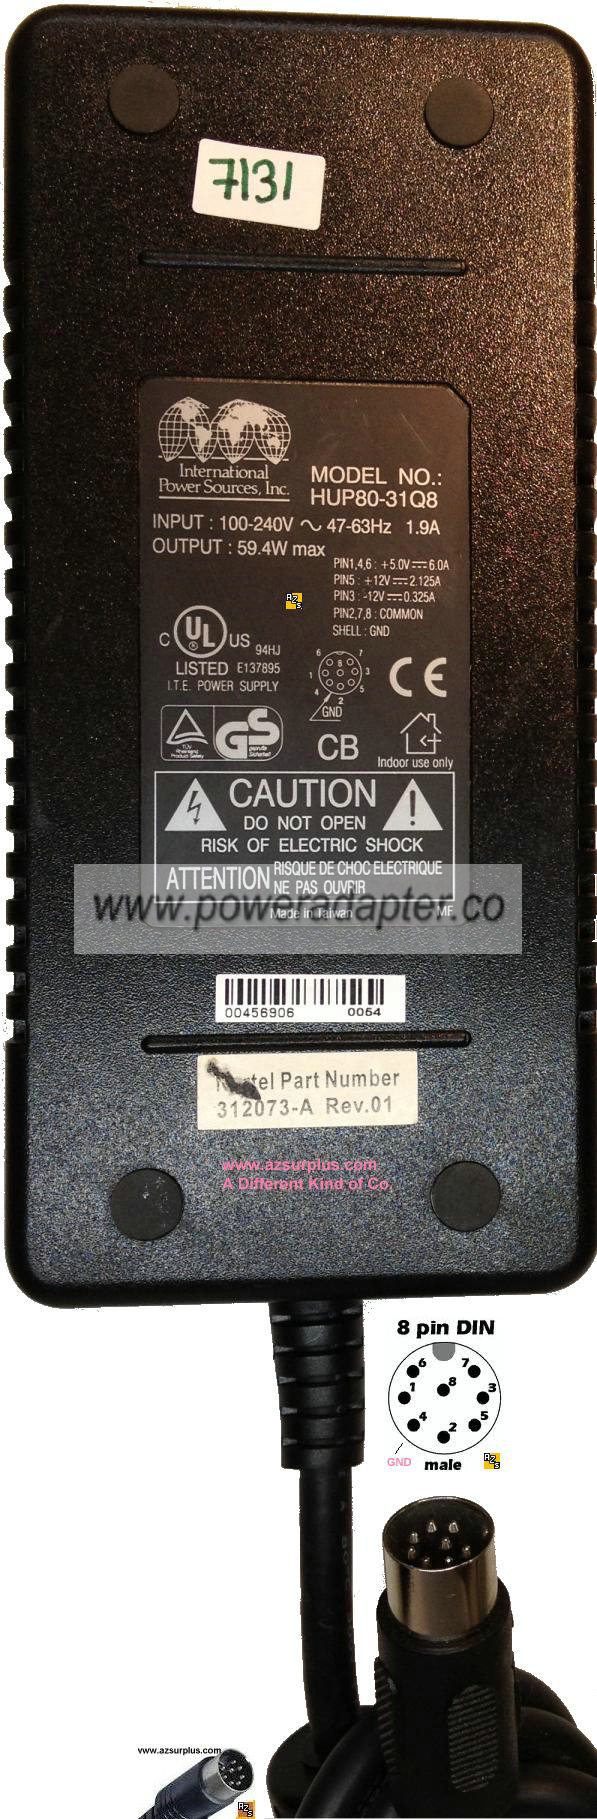 INTERNATIONAL POWER SOURCE HUP80-31Q8 AC ADAPTER 5VDC 6A 12V 2.1